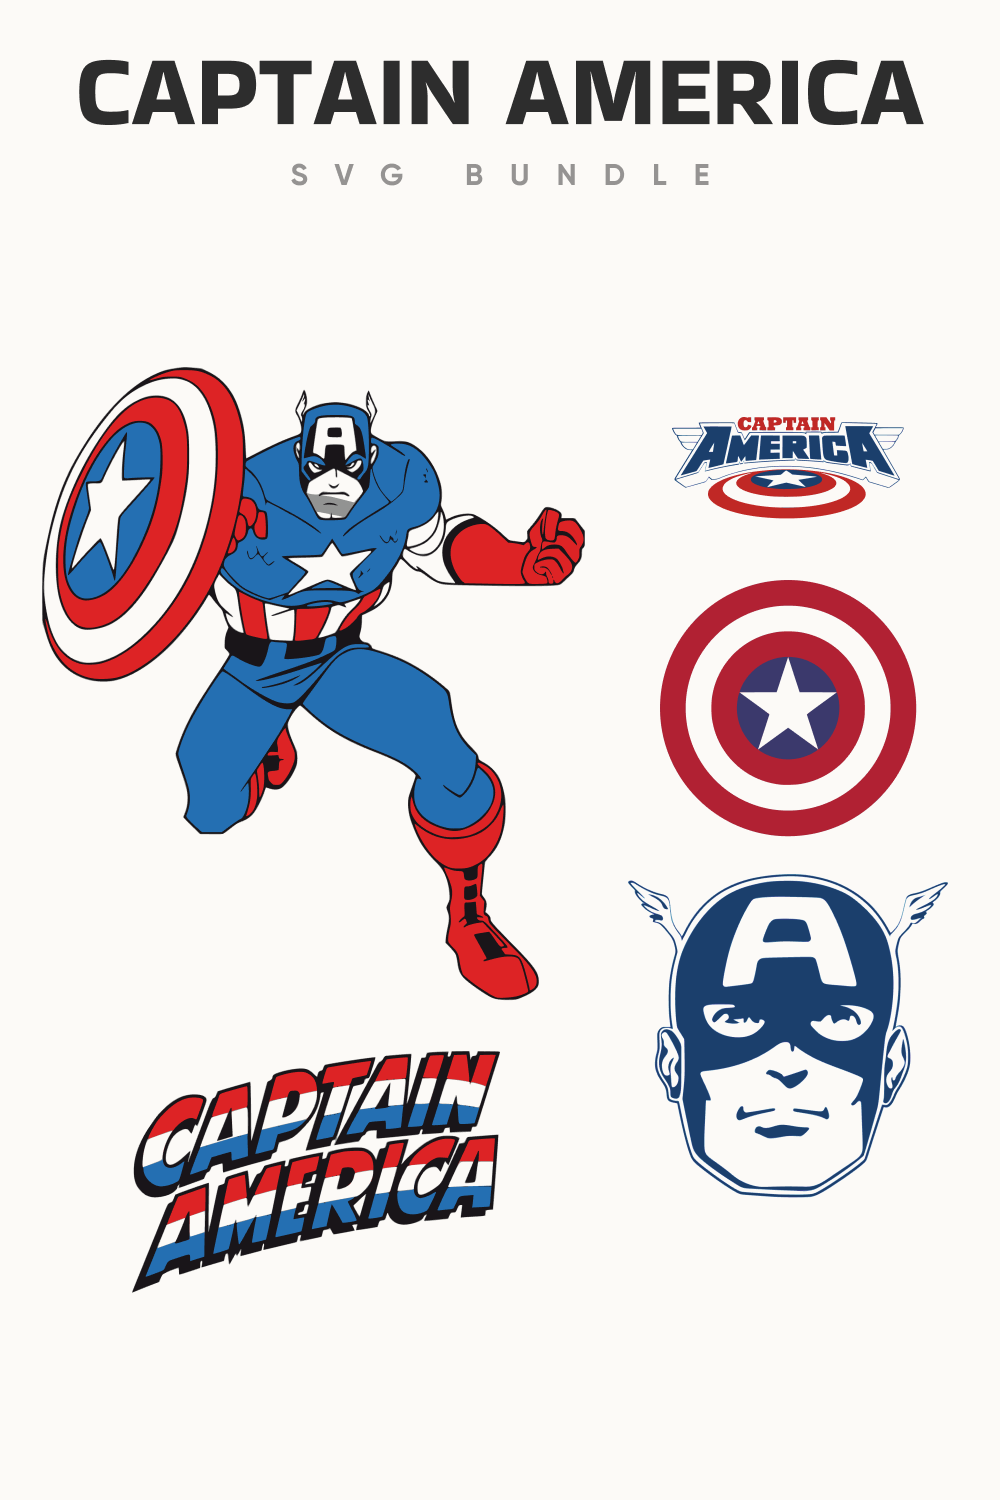 Cool Captain America in his best costume.